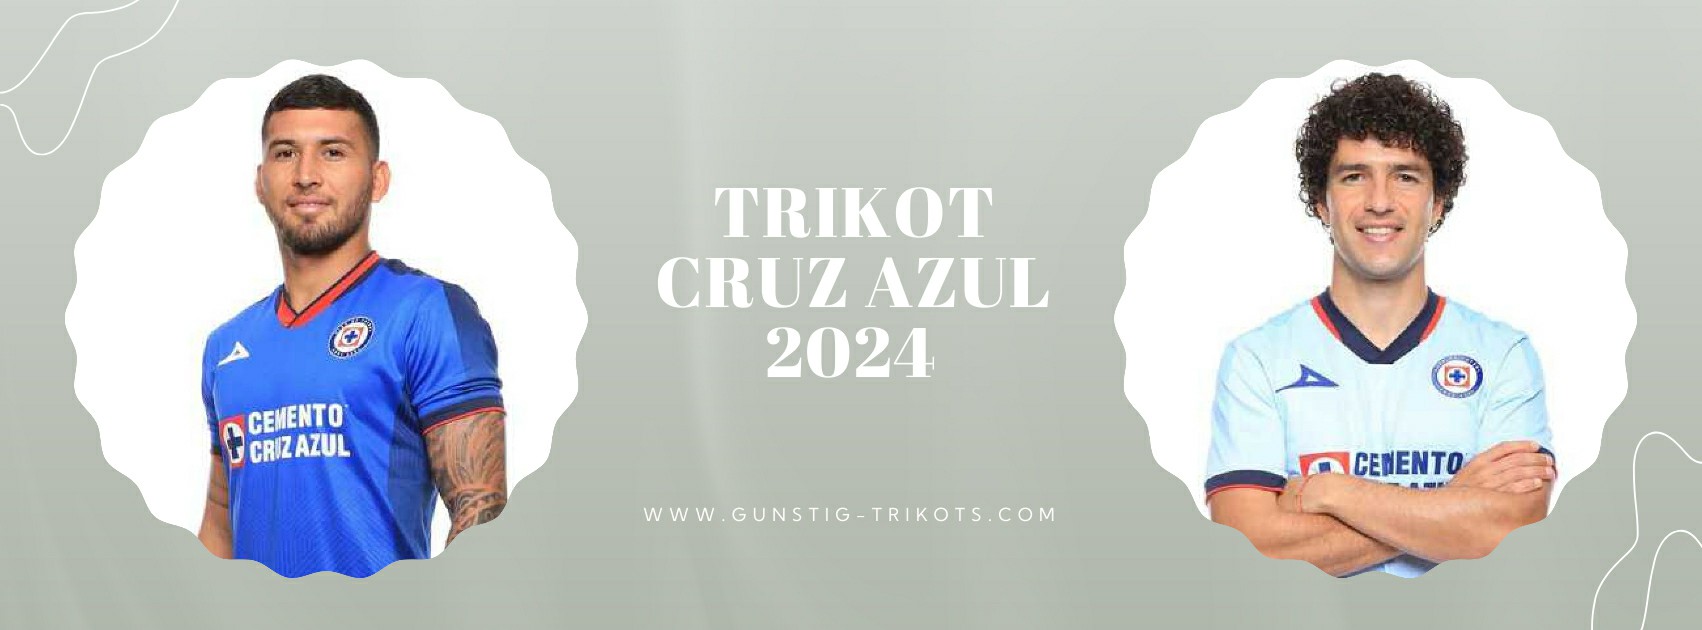 Cruz Azul Trikot 2024-2025